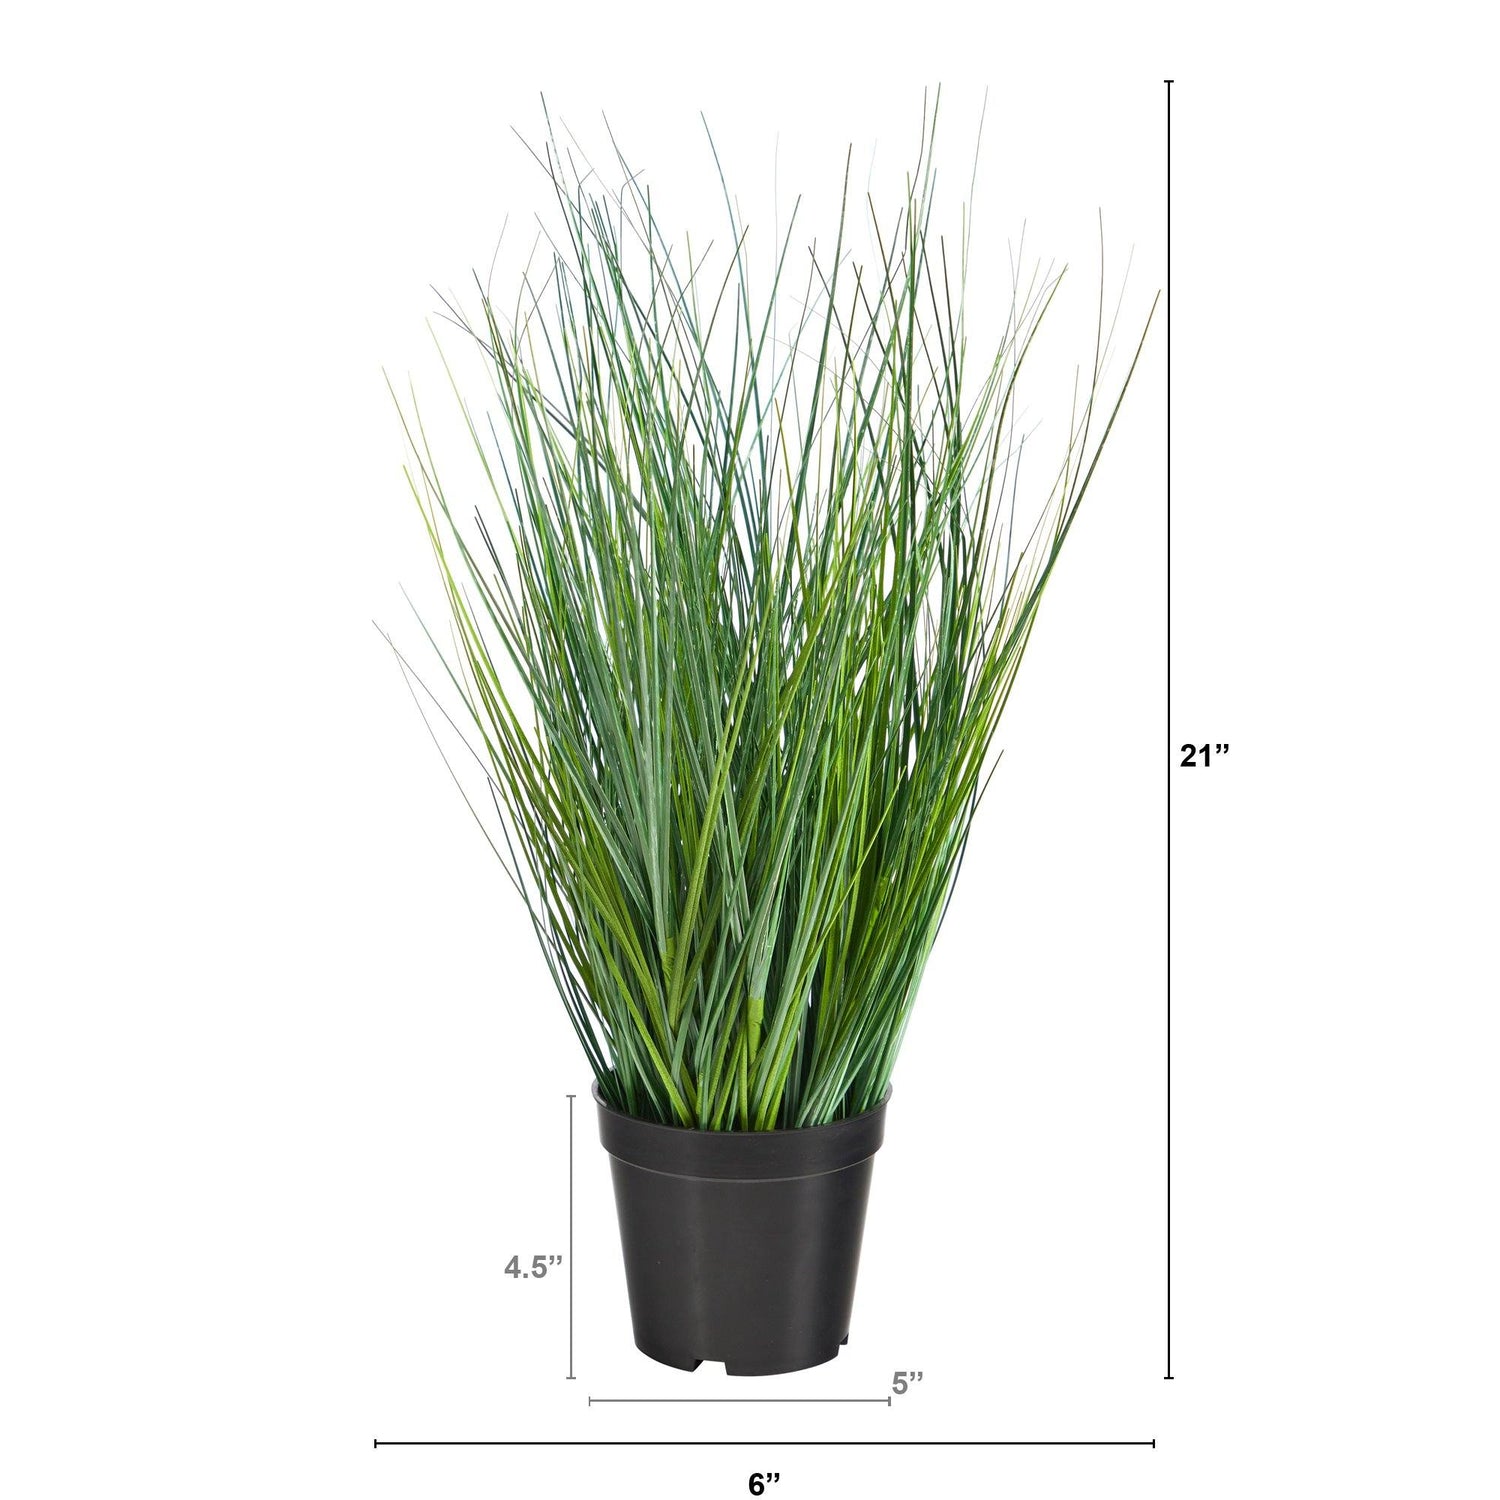 21” Onion Grass Artificial Plant